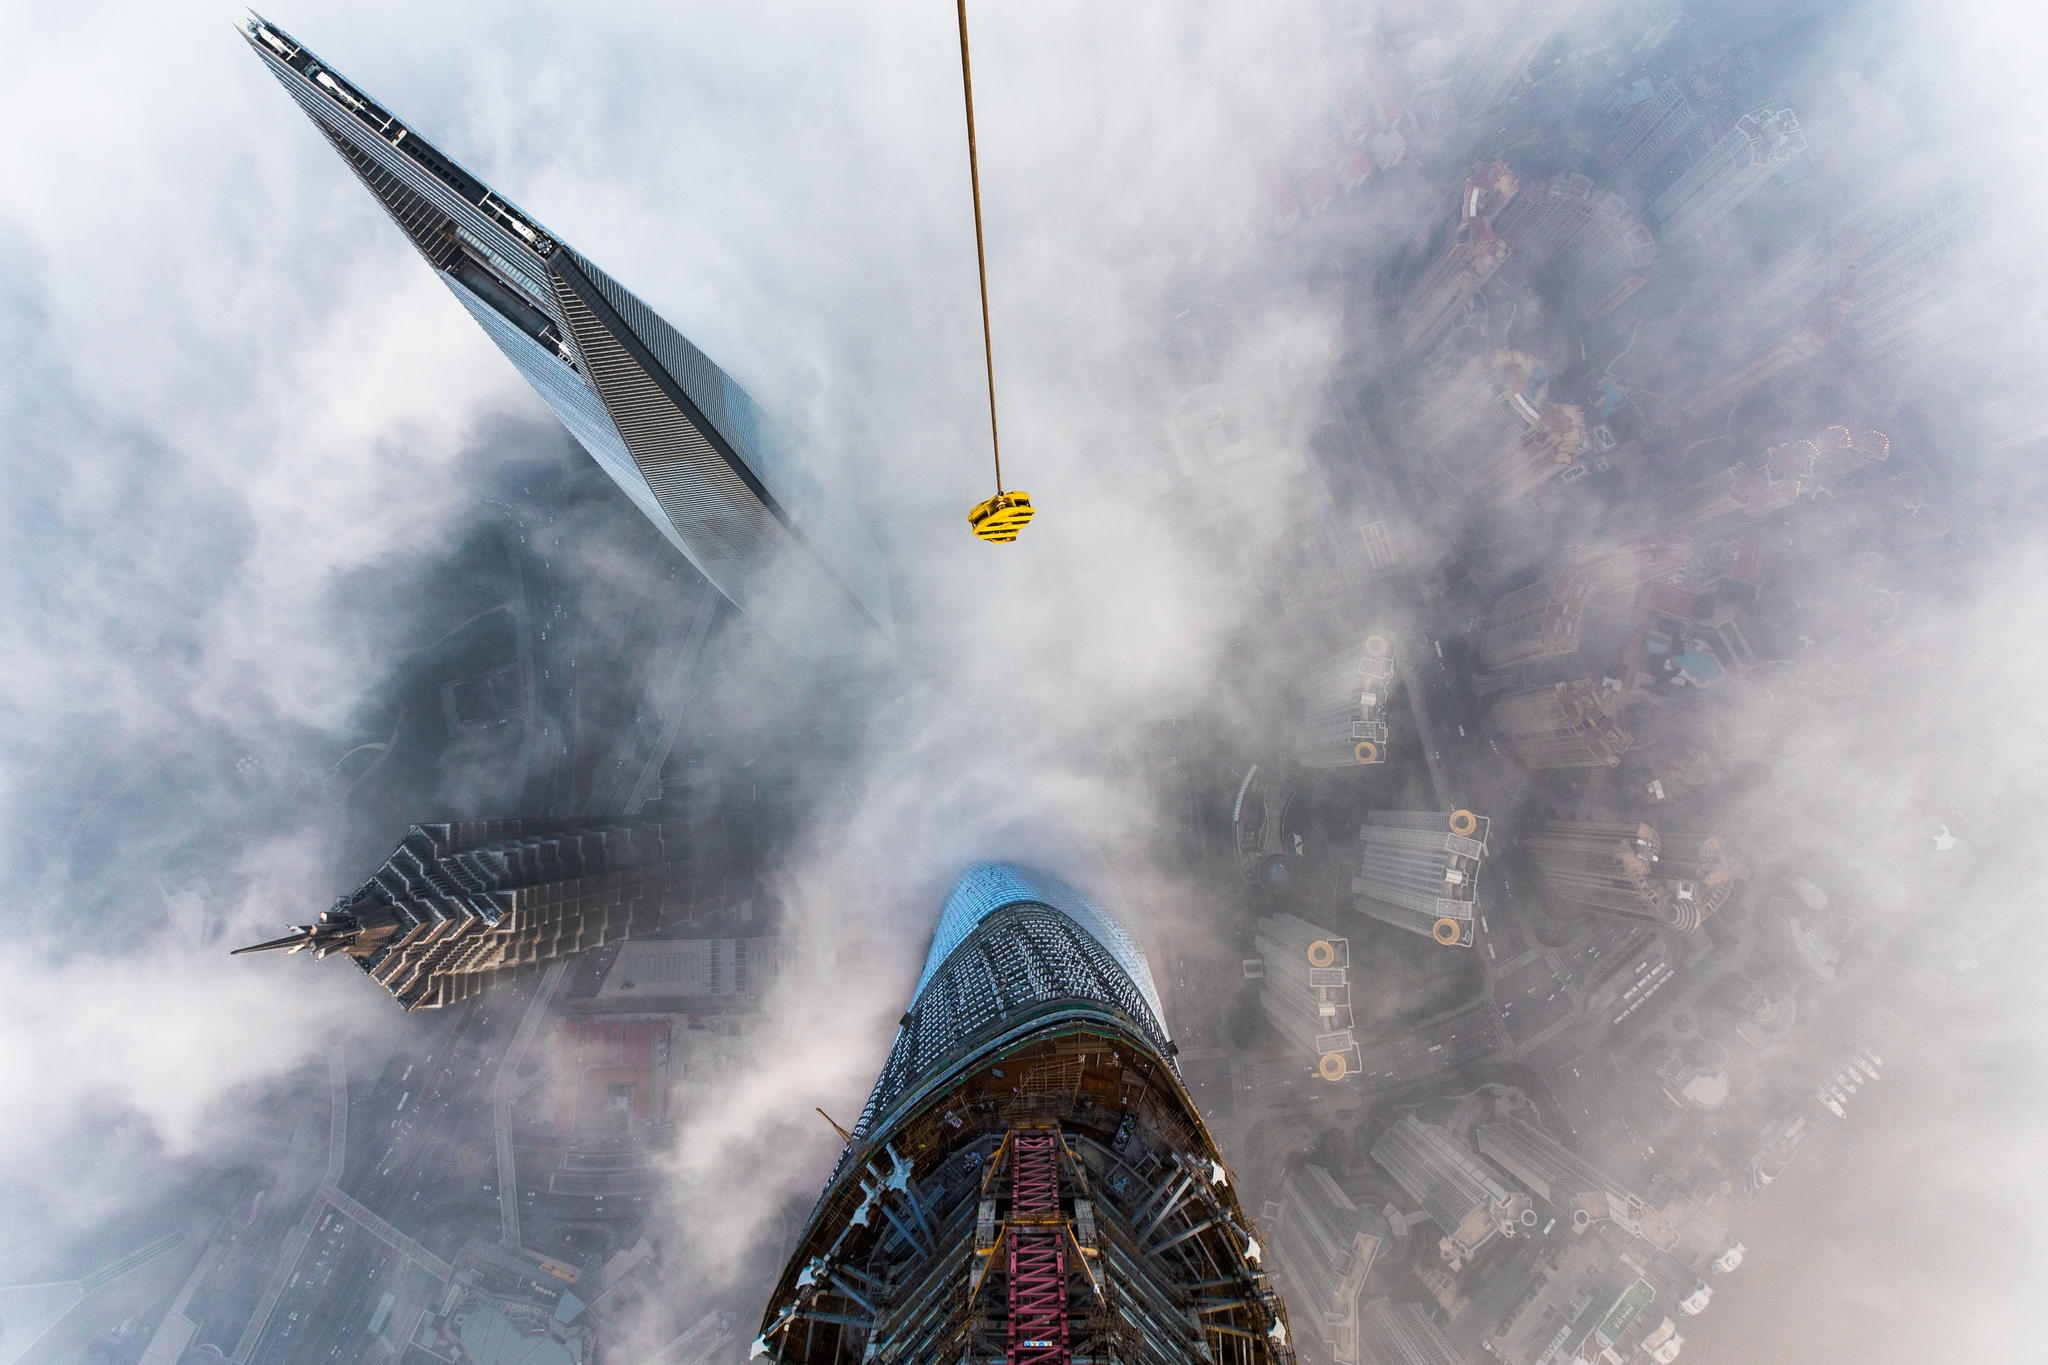 The Story Behind that Insane Shanghai Tower Climb